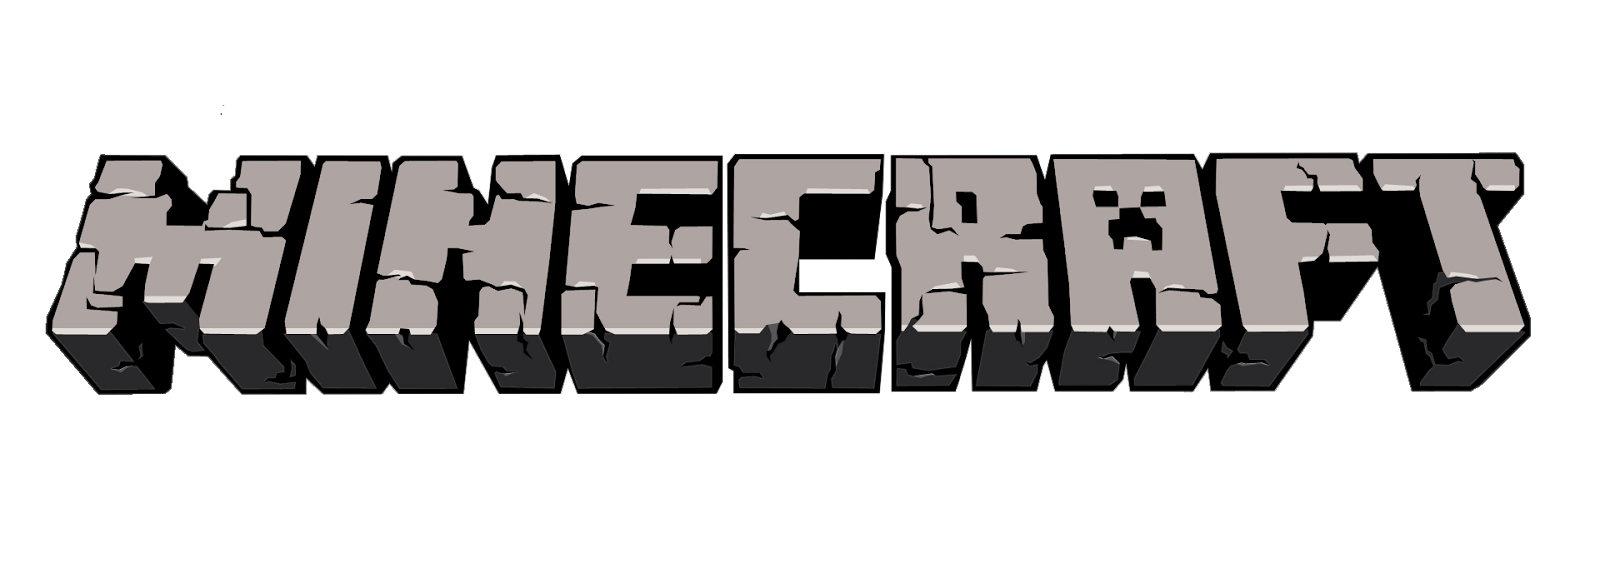 Minecraft Steve Render By Cor